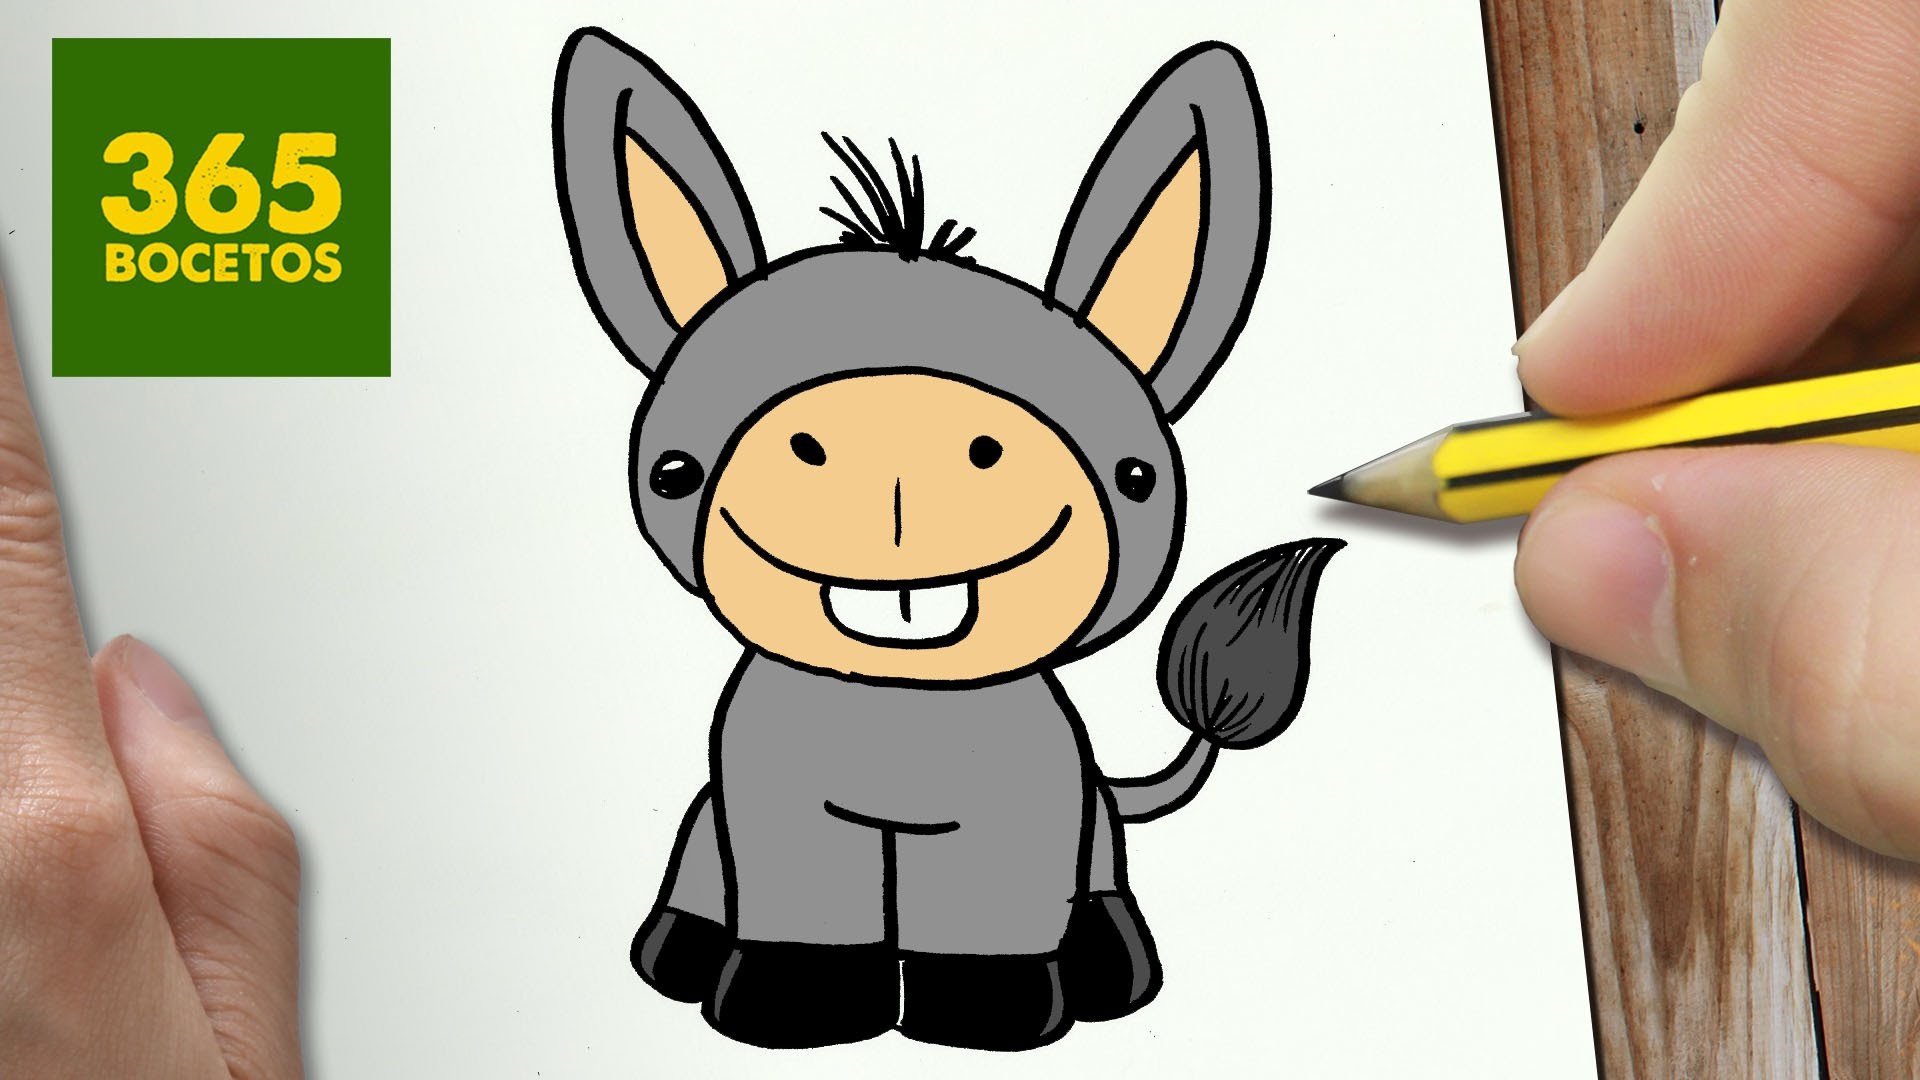 COMO DIBUJAR UN BURRO PARA NAVIDAD PASO A PASO: Dibujos kawaii navideños - How to draw a donkey